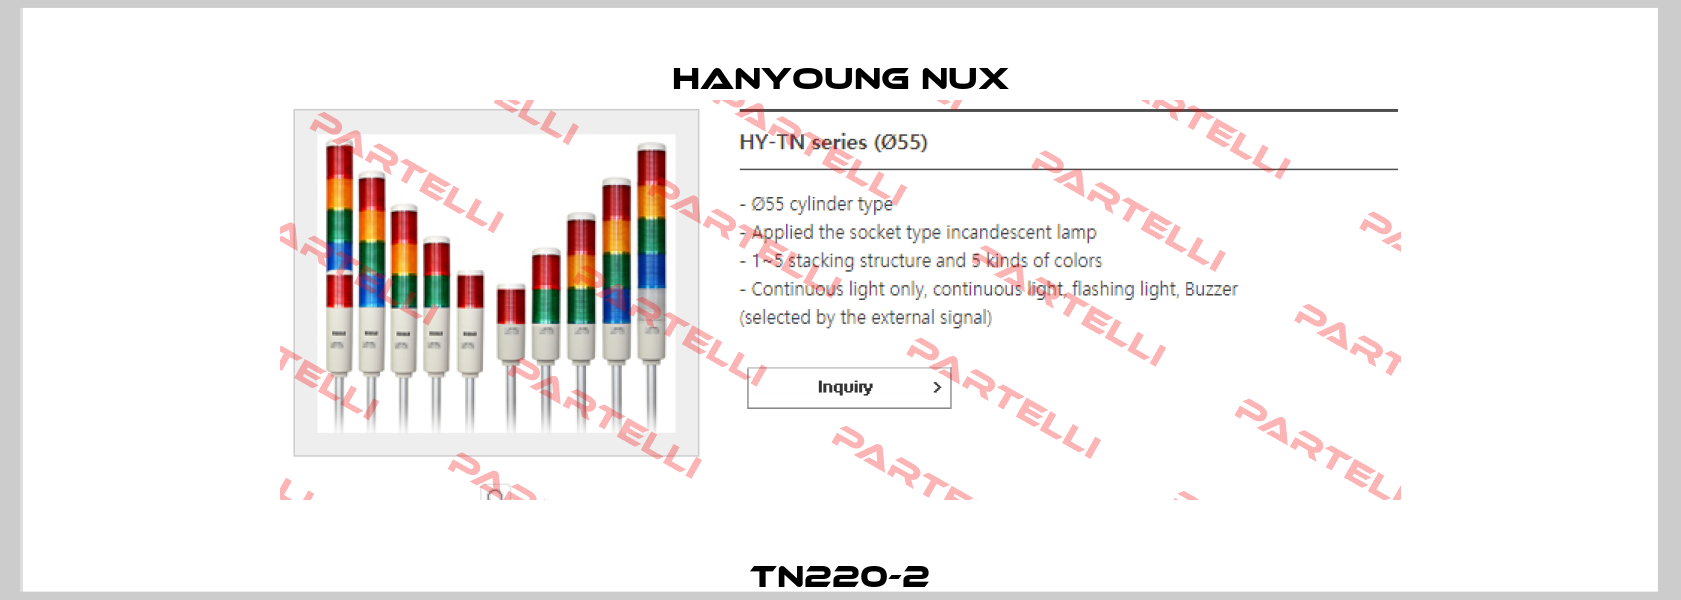 TN220-2 HanYoung NUX